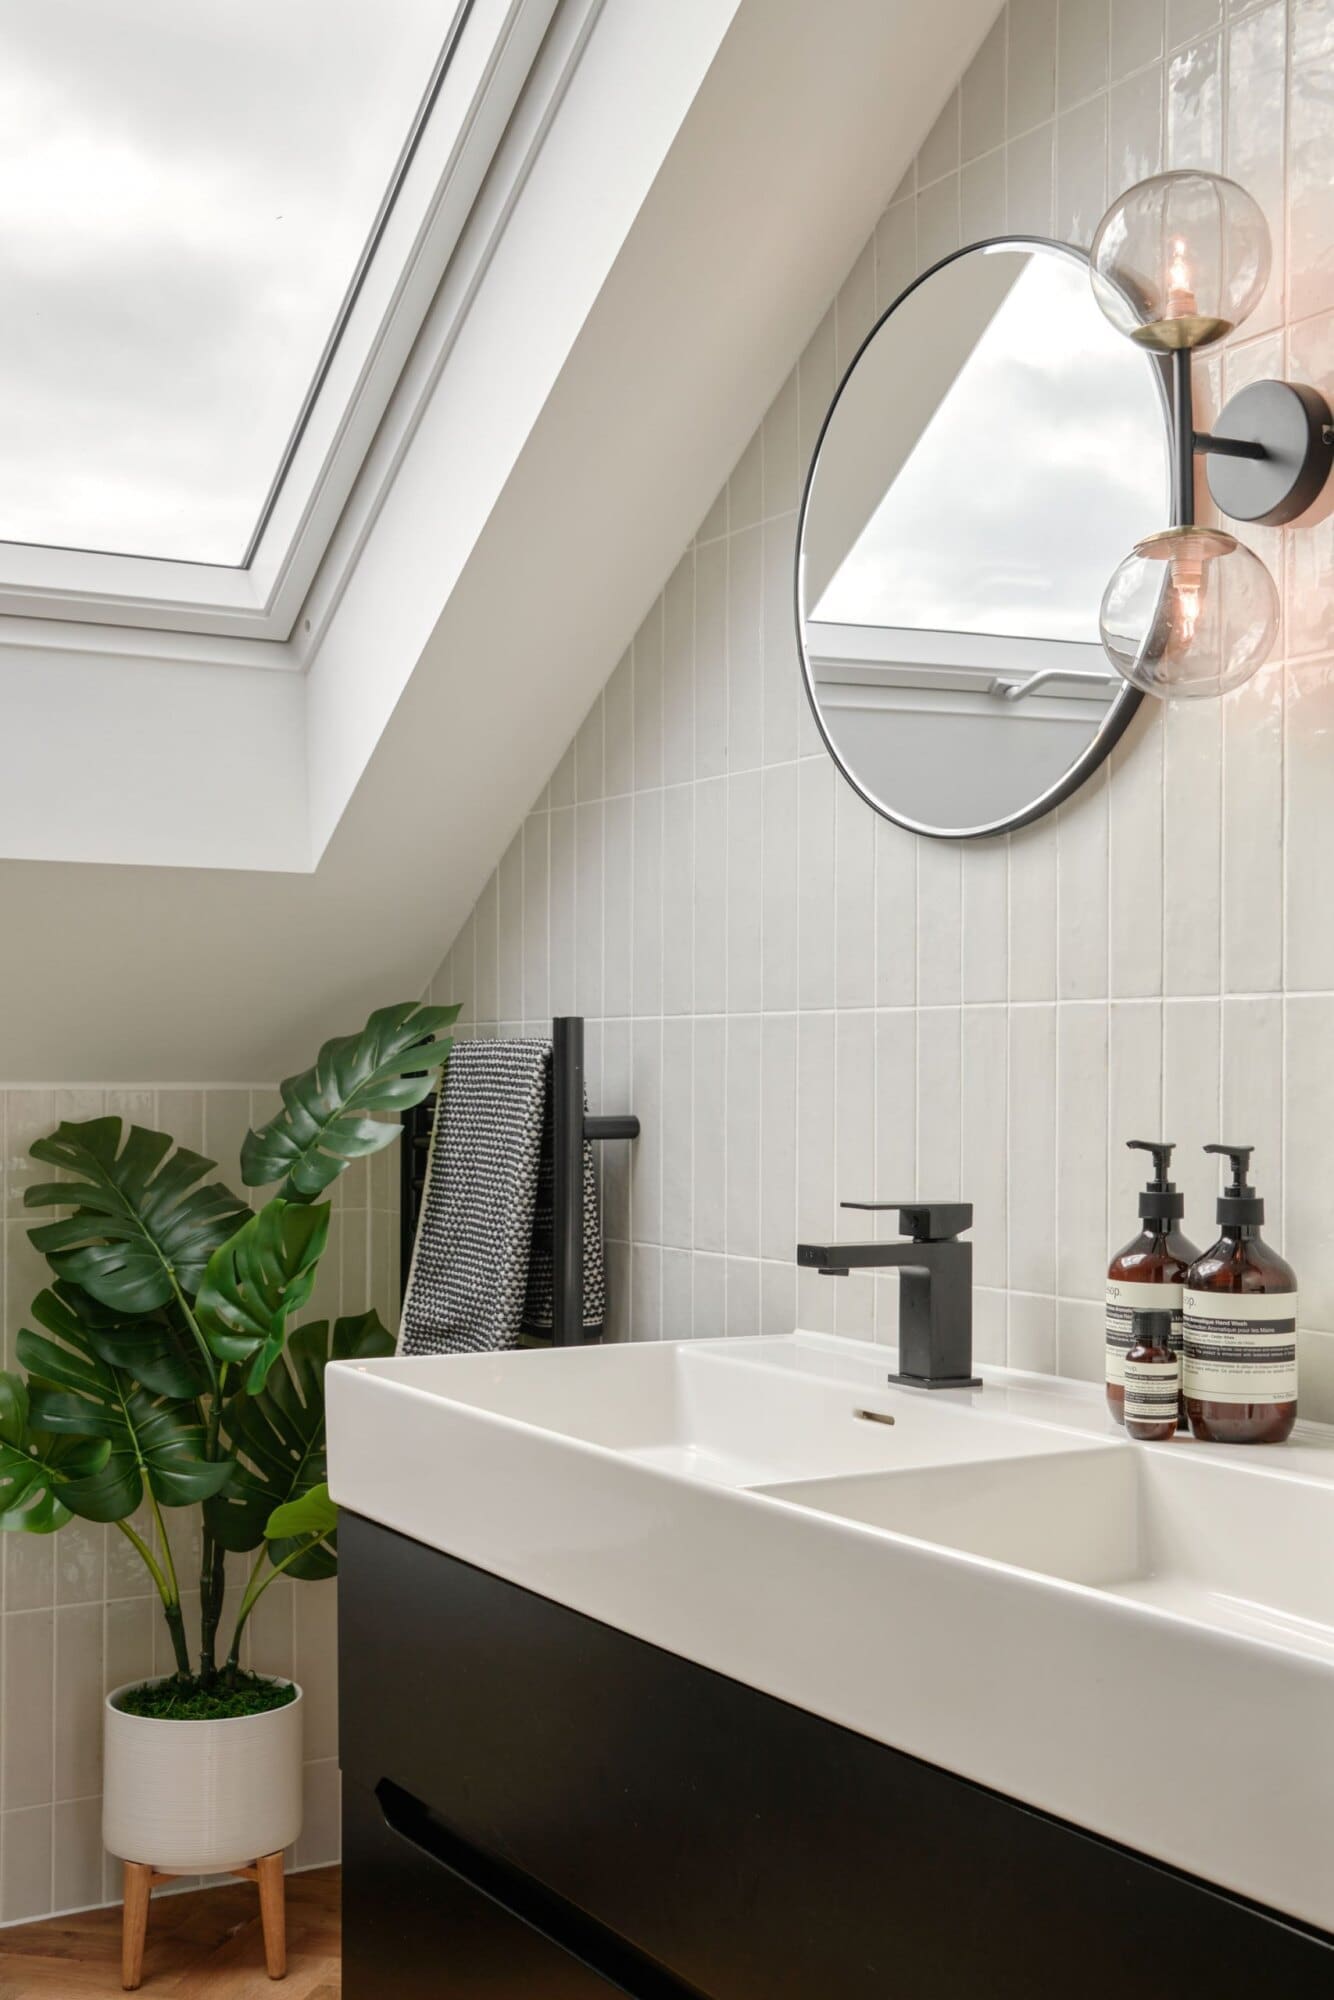 bright pitched roof windows illuminate modern white sink